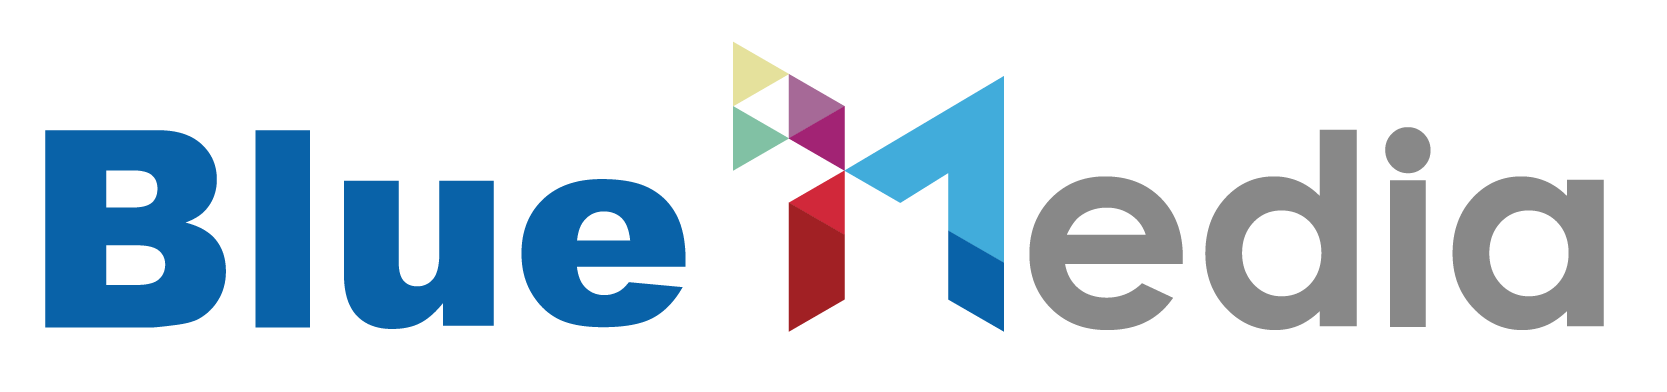 Bluemedia Pte. Ltd. logo